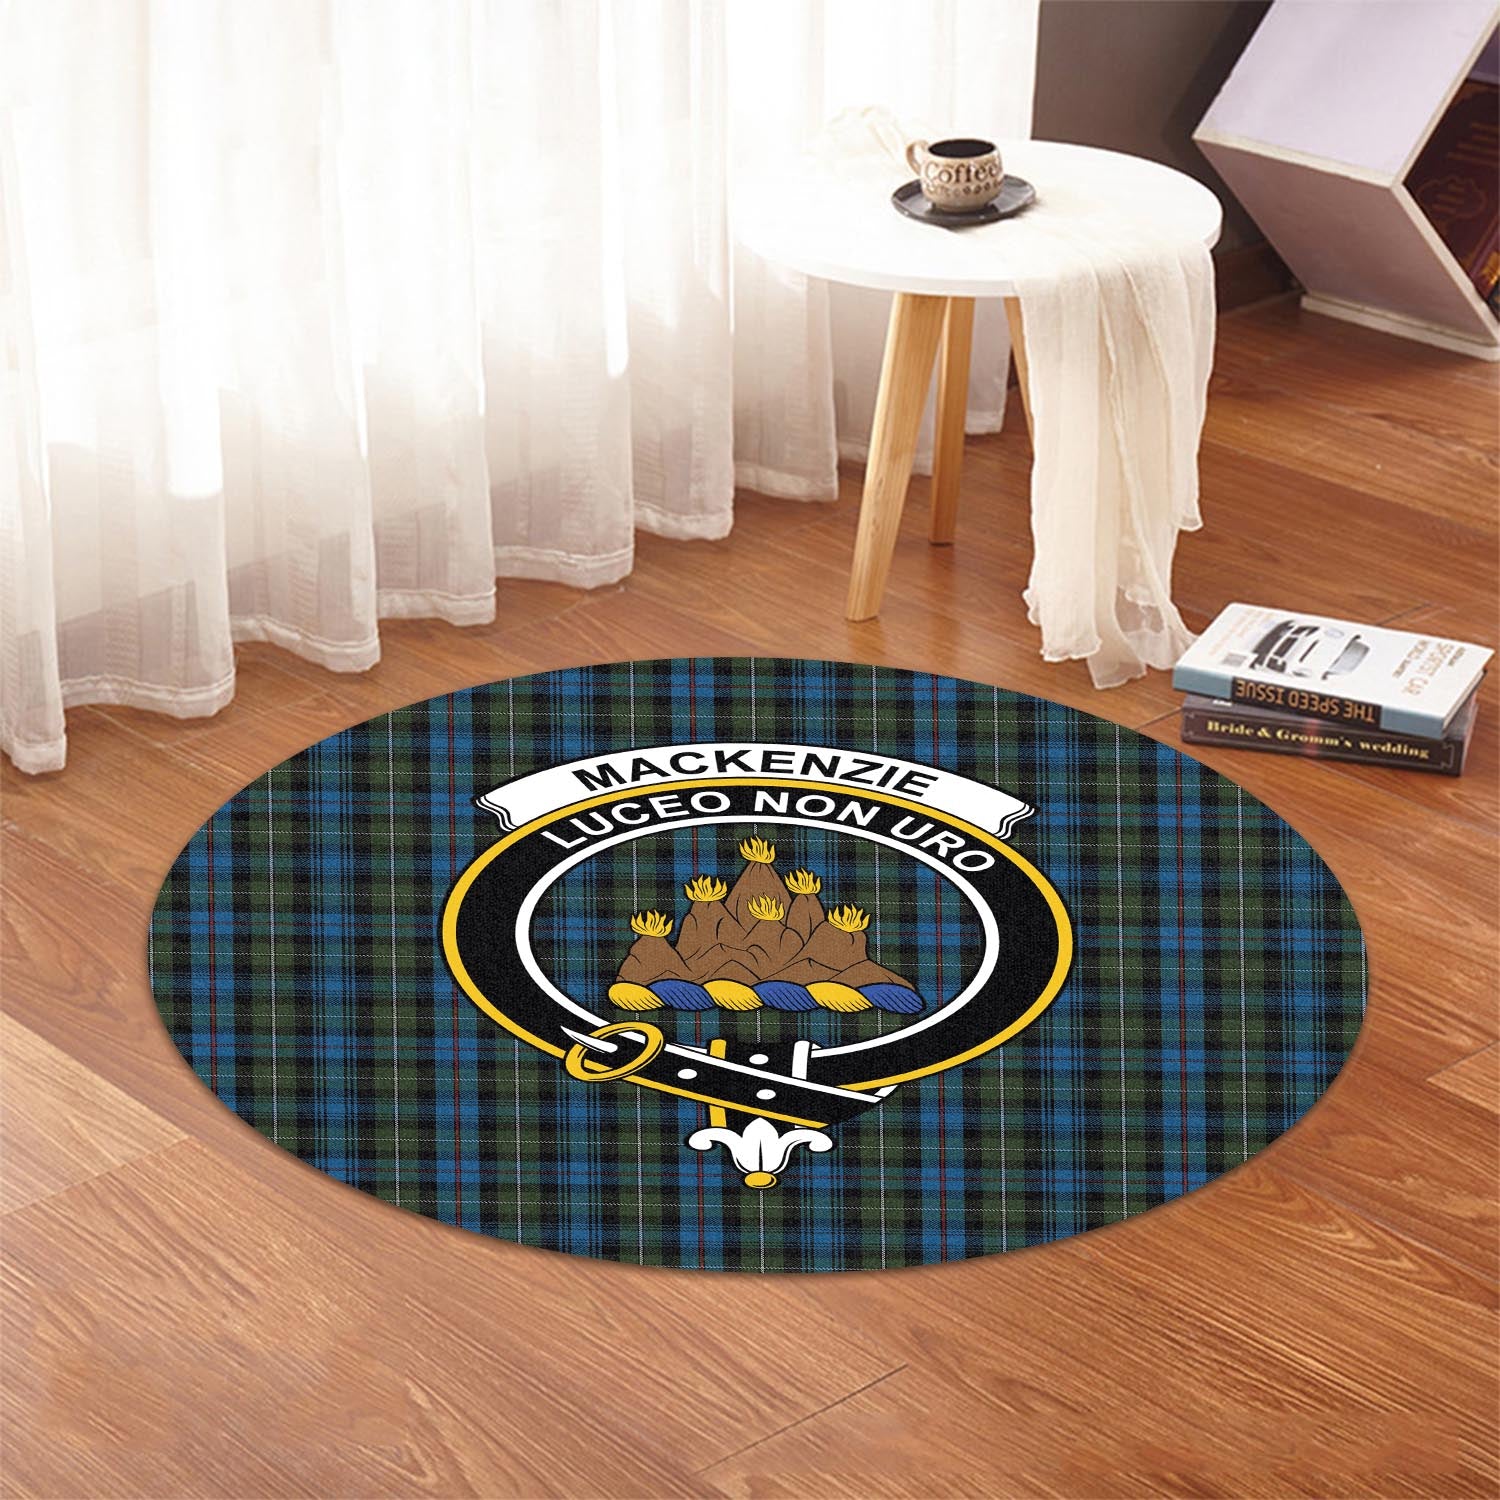 mackenzie-tartan-round-rug-with-family-crest